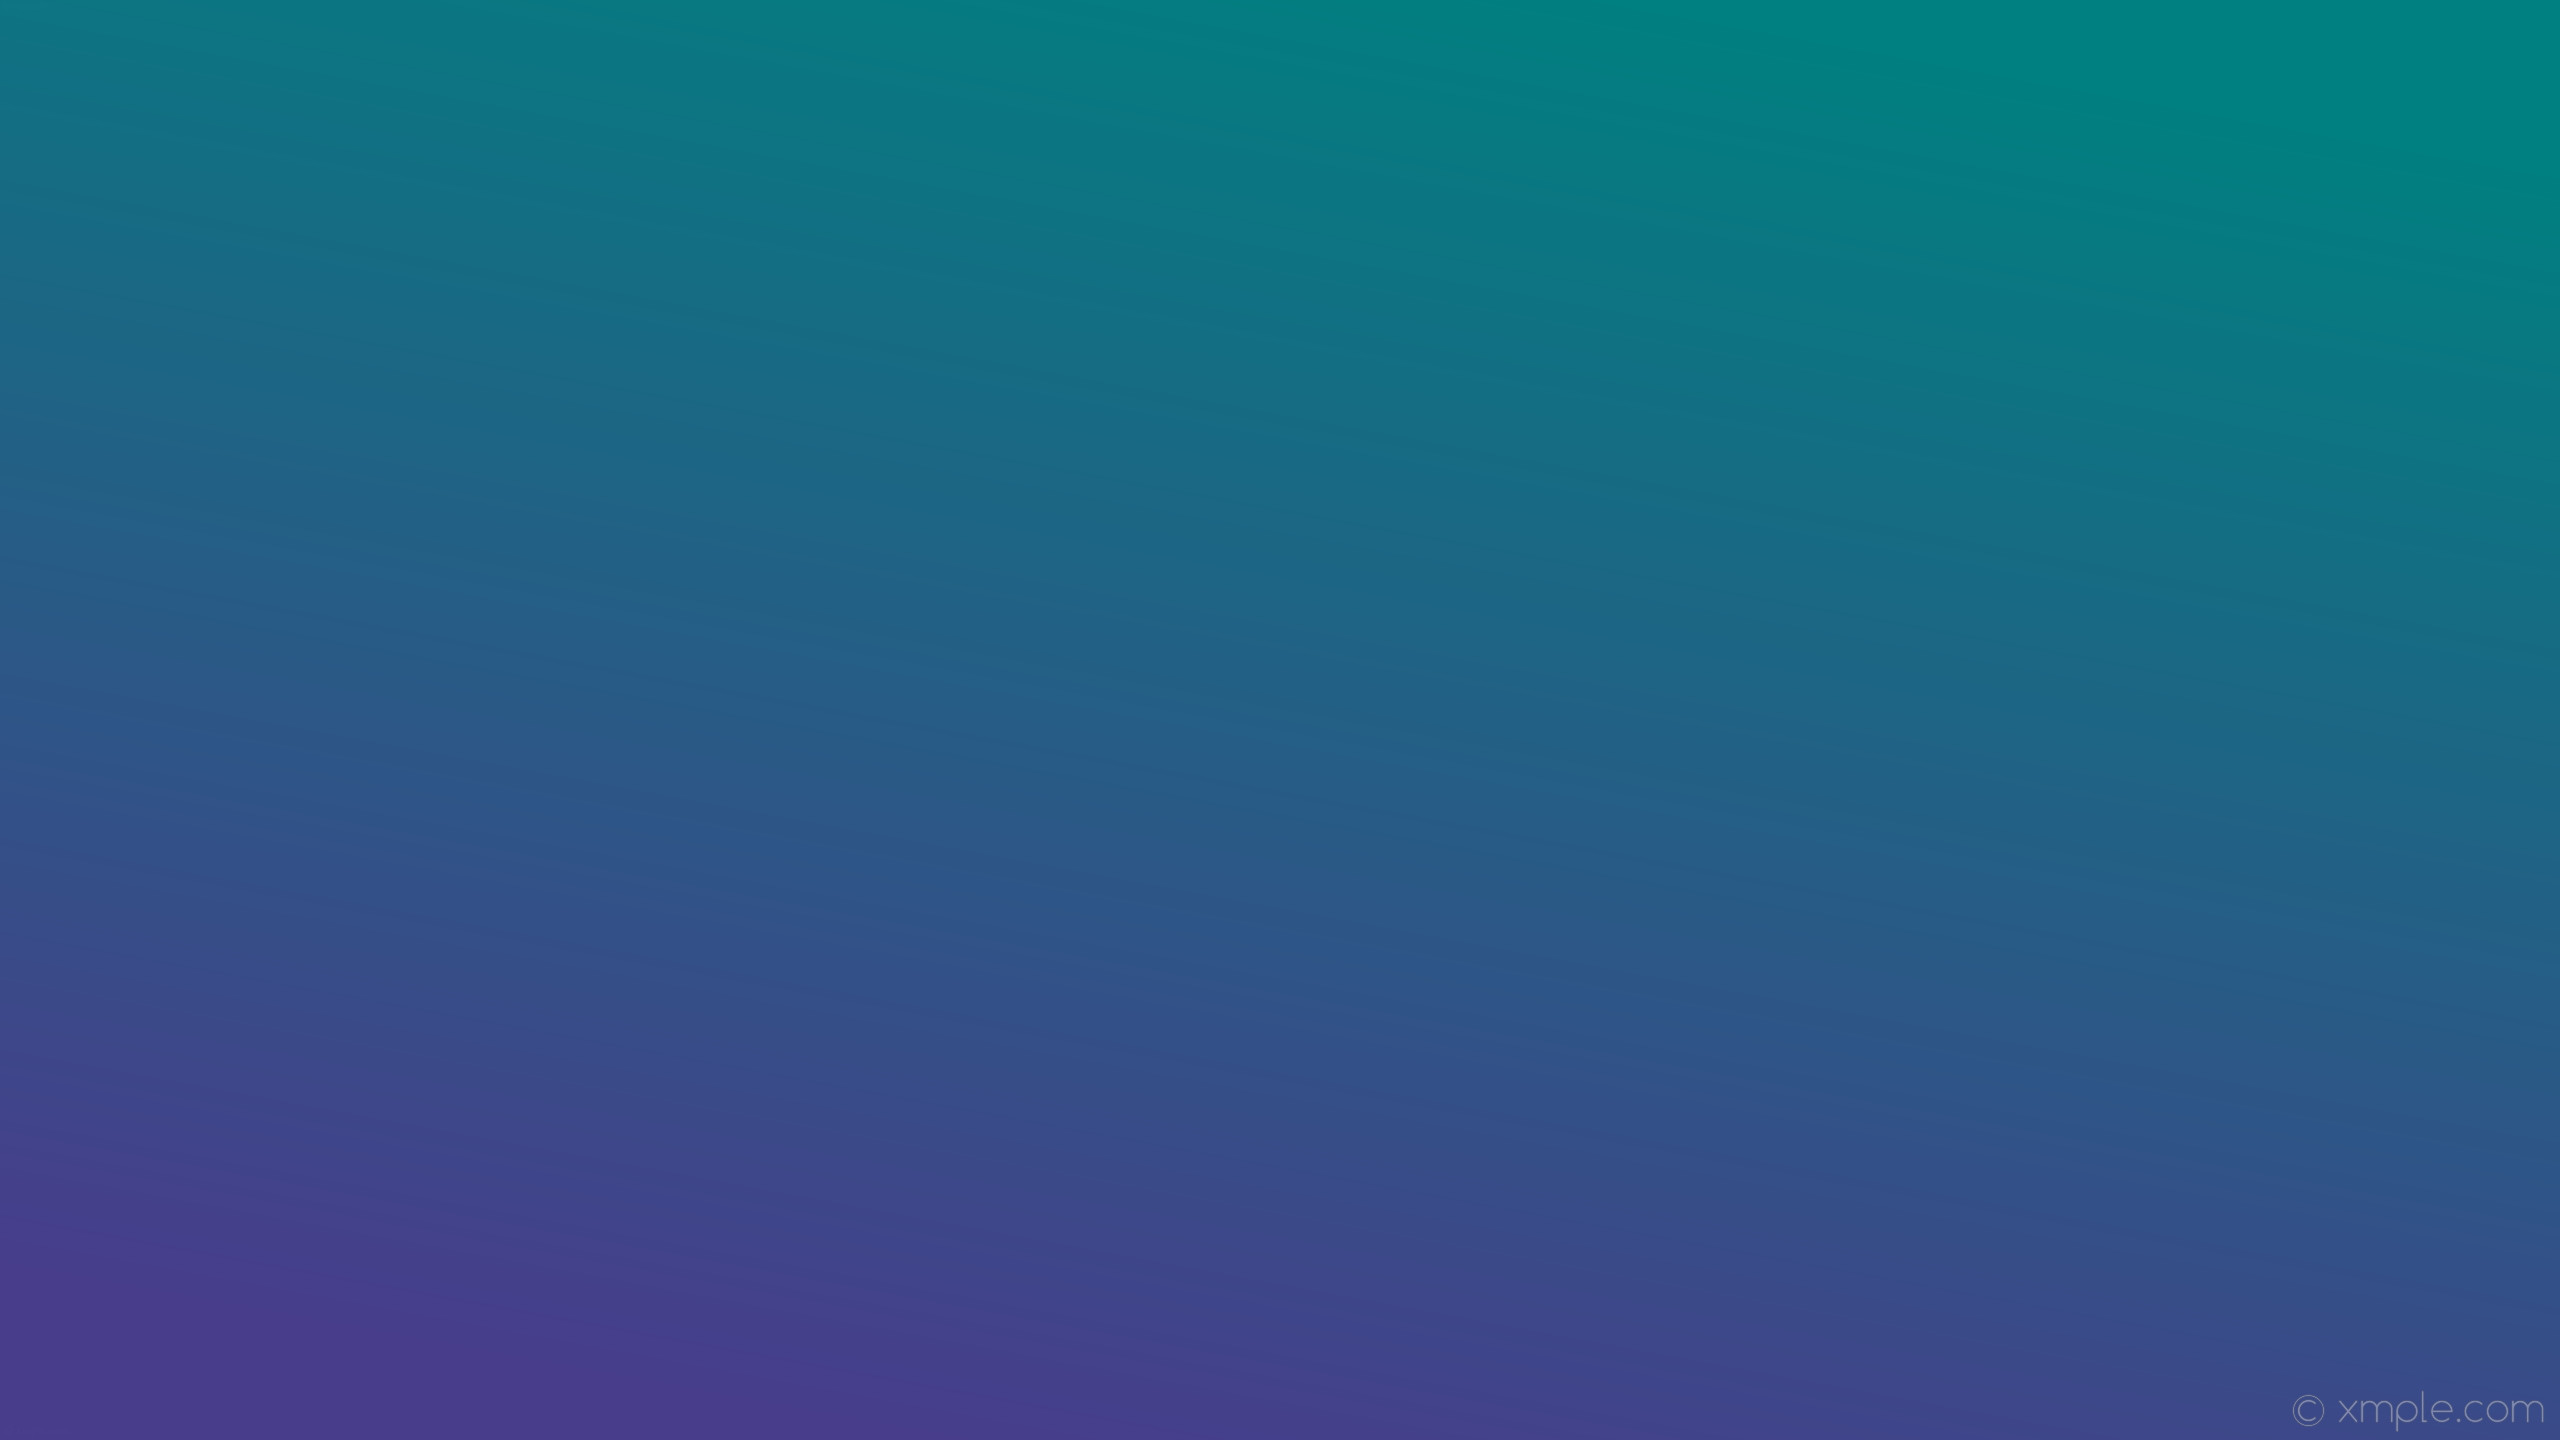 2560x1440 wallpaper gradient green purple linear teal dark slate blue #008080 #483d8b  60Â°